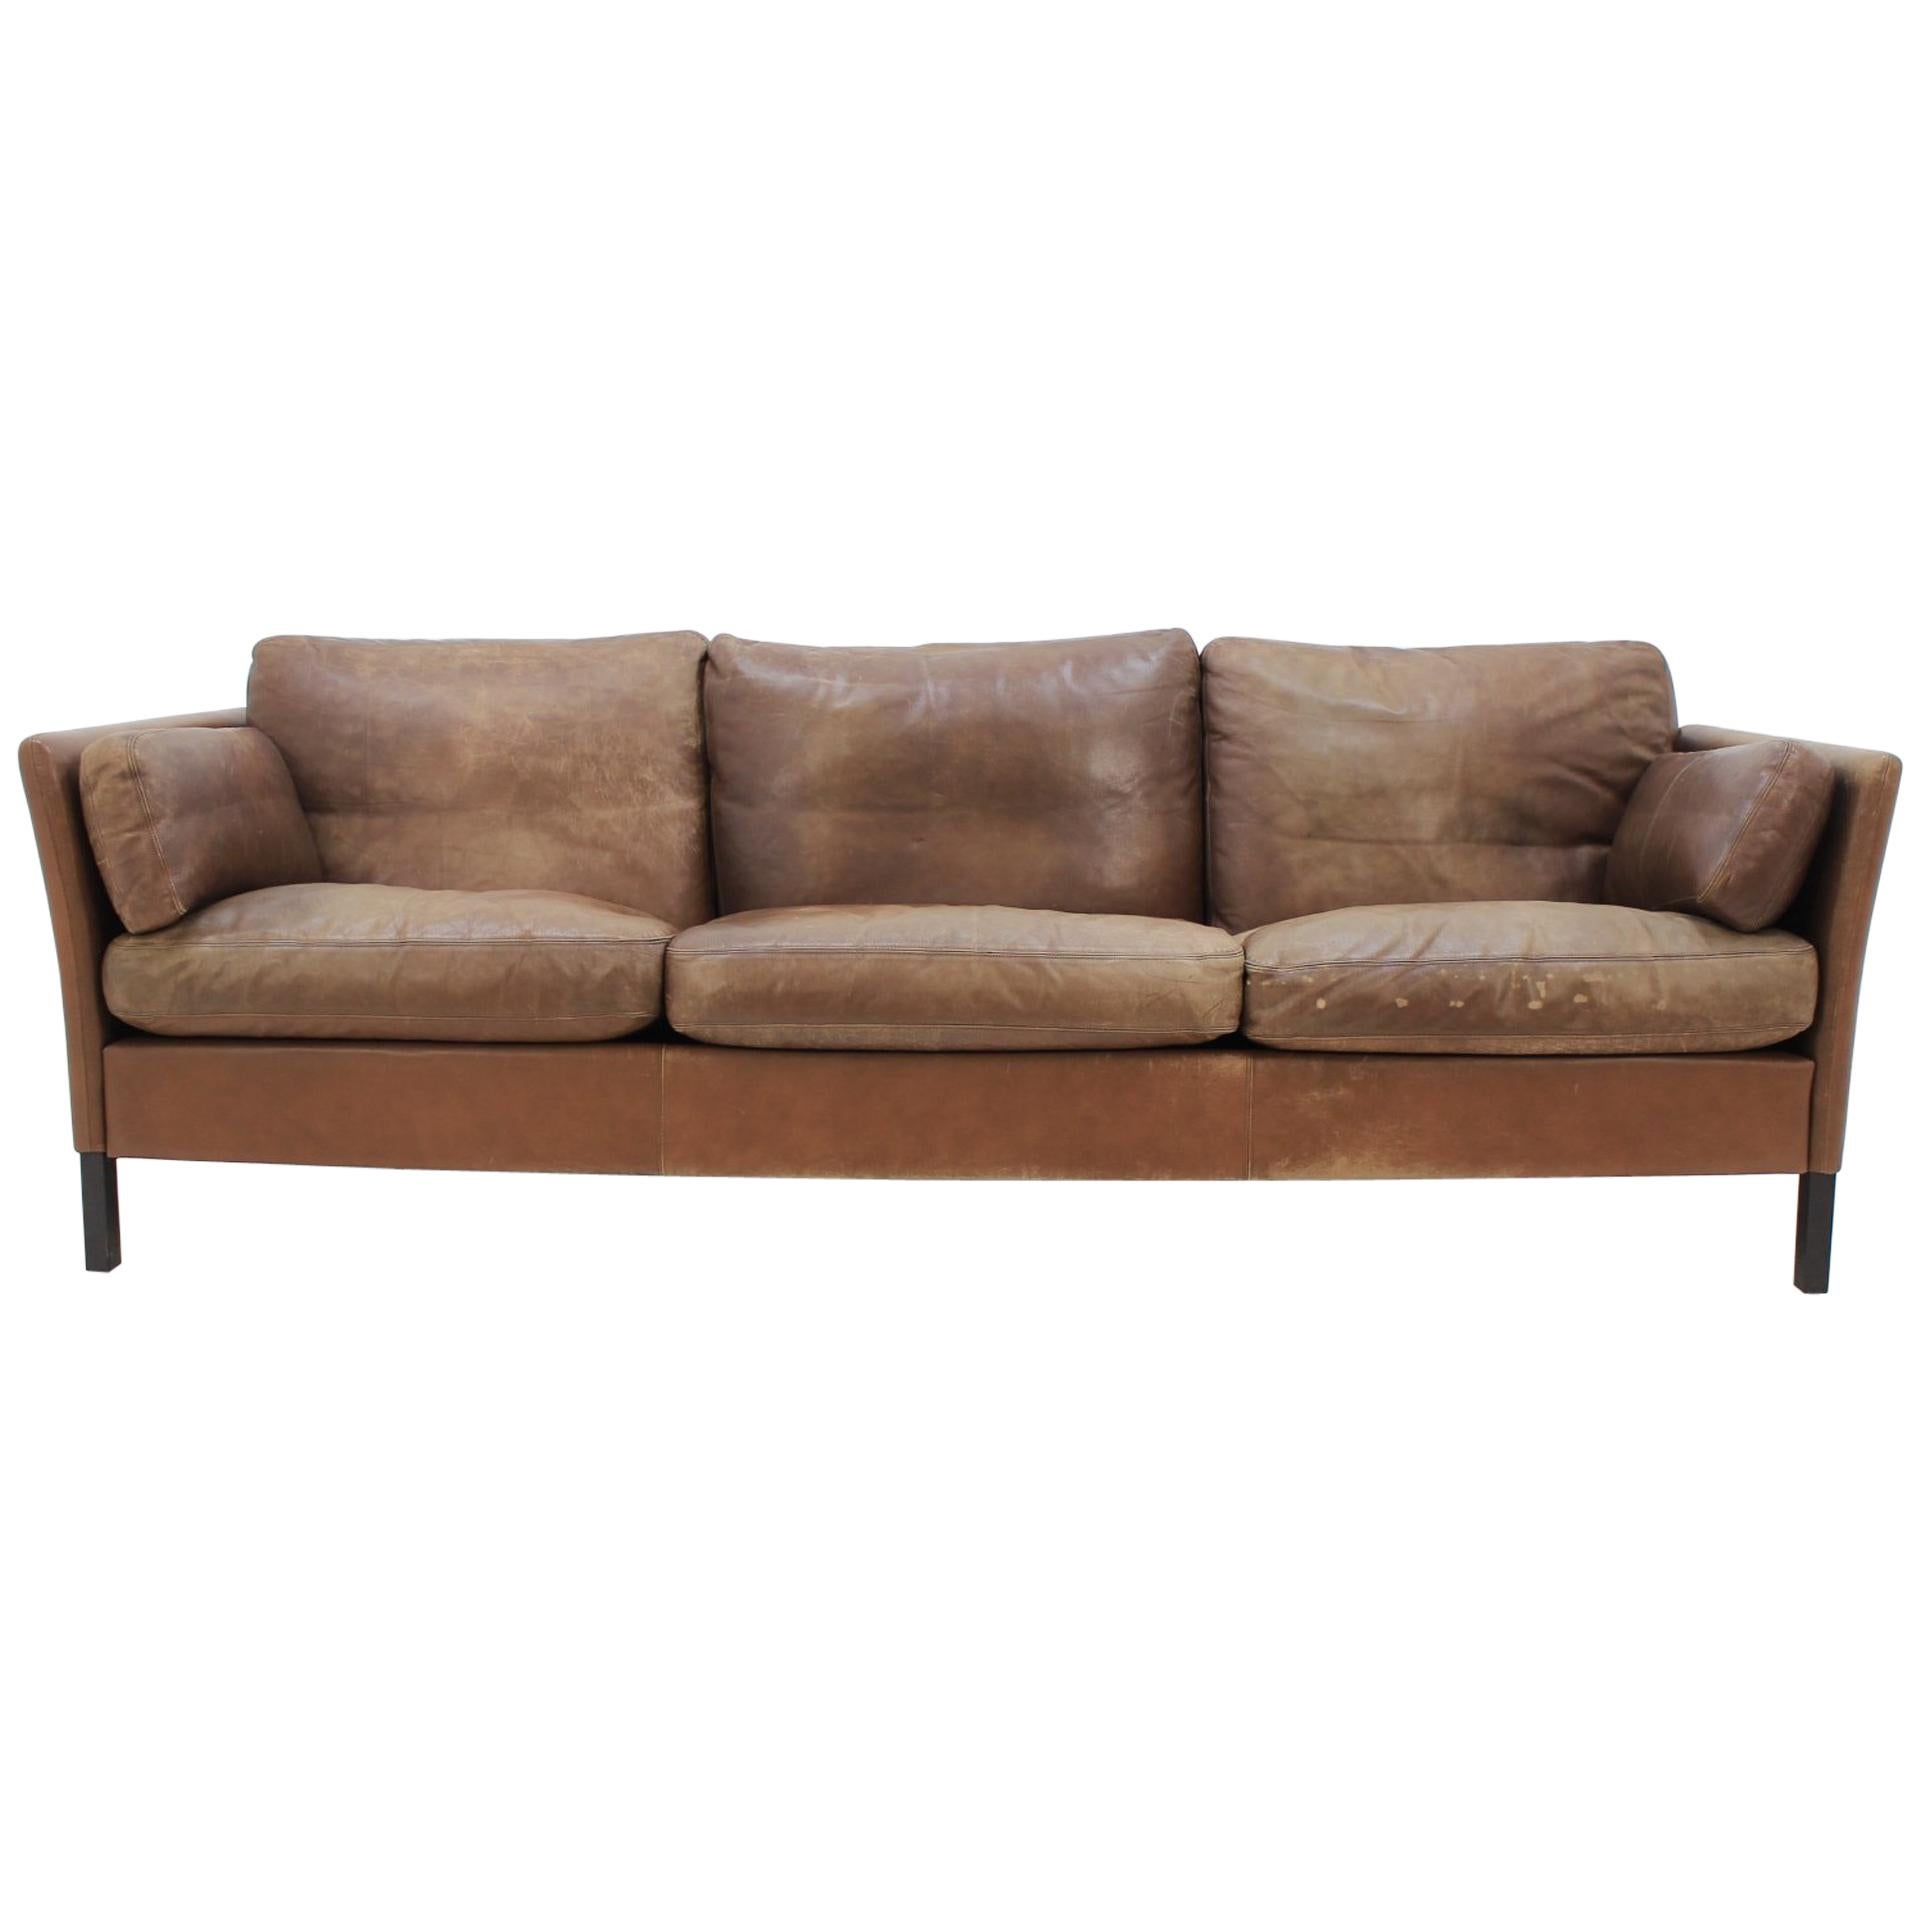 1960s Georg Thams Danish Three Seater Sofa in Brown Leather